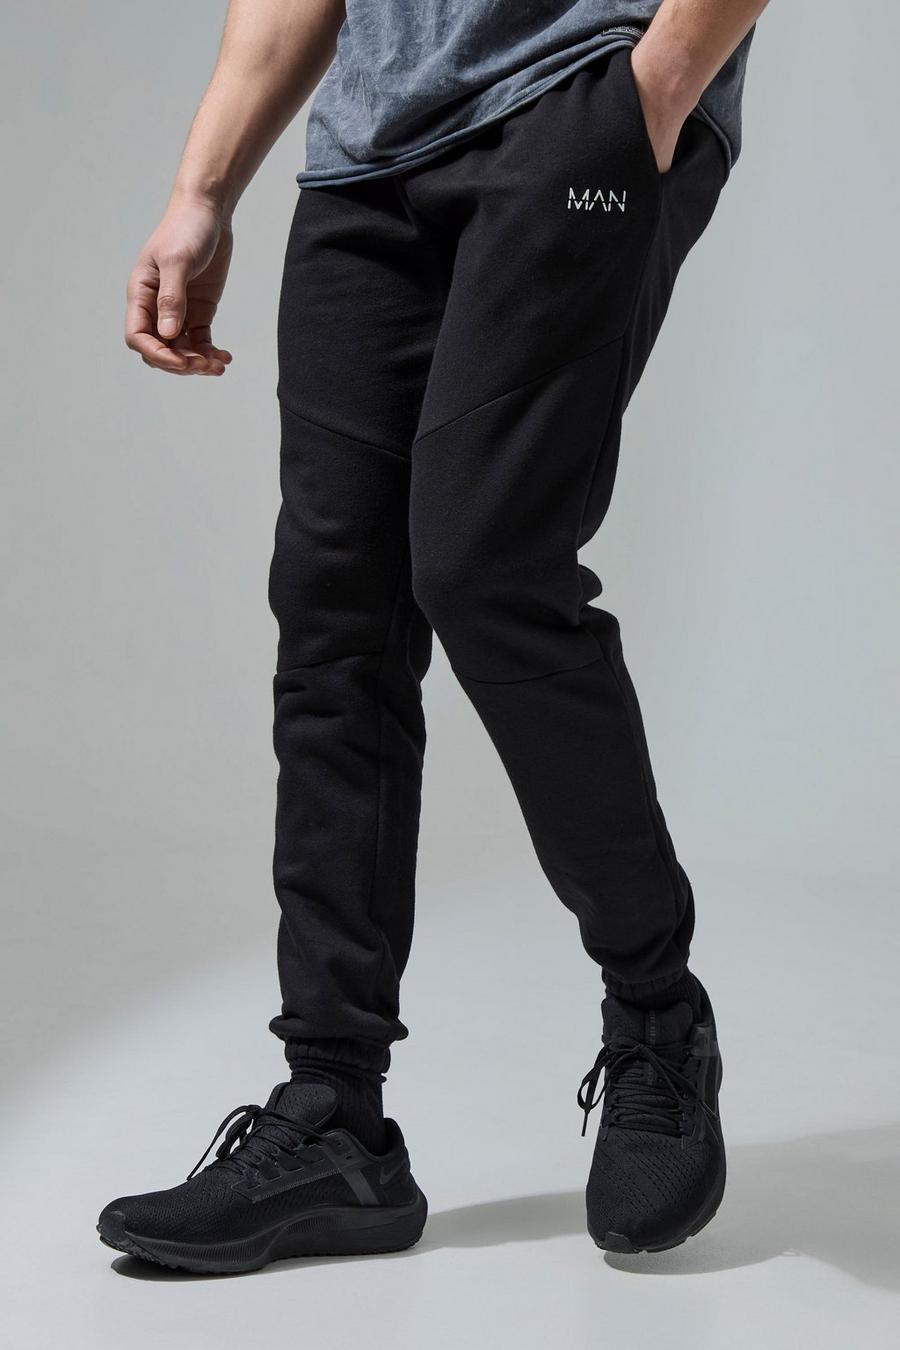 Pantaloni tuta Man Active Gym con tasche - set di 2 paia, Black